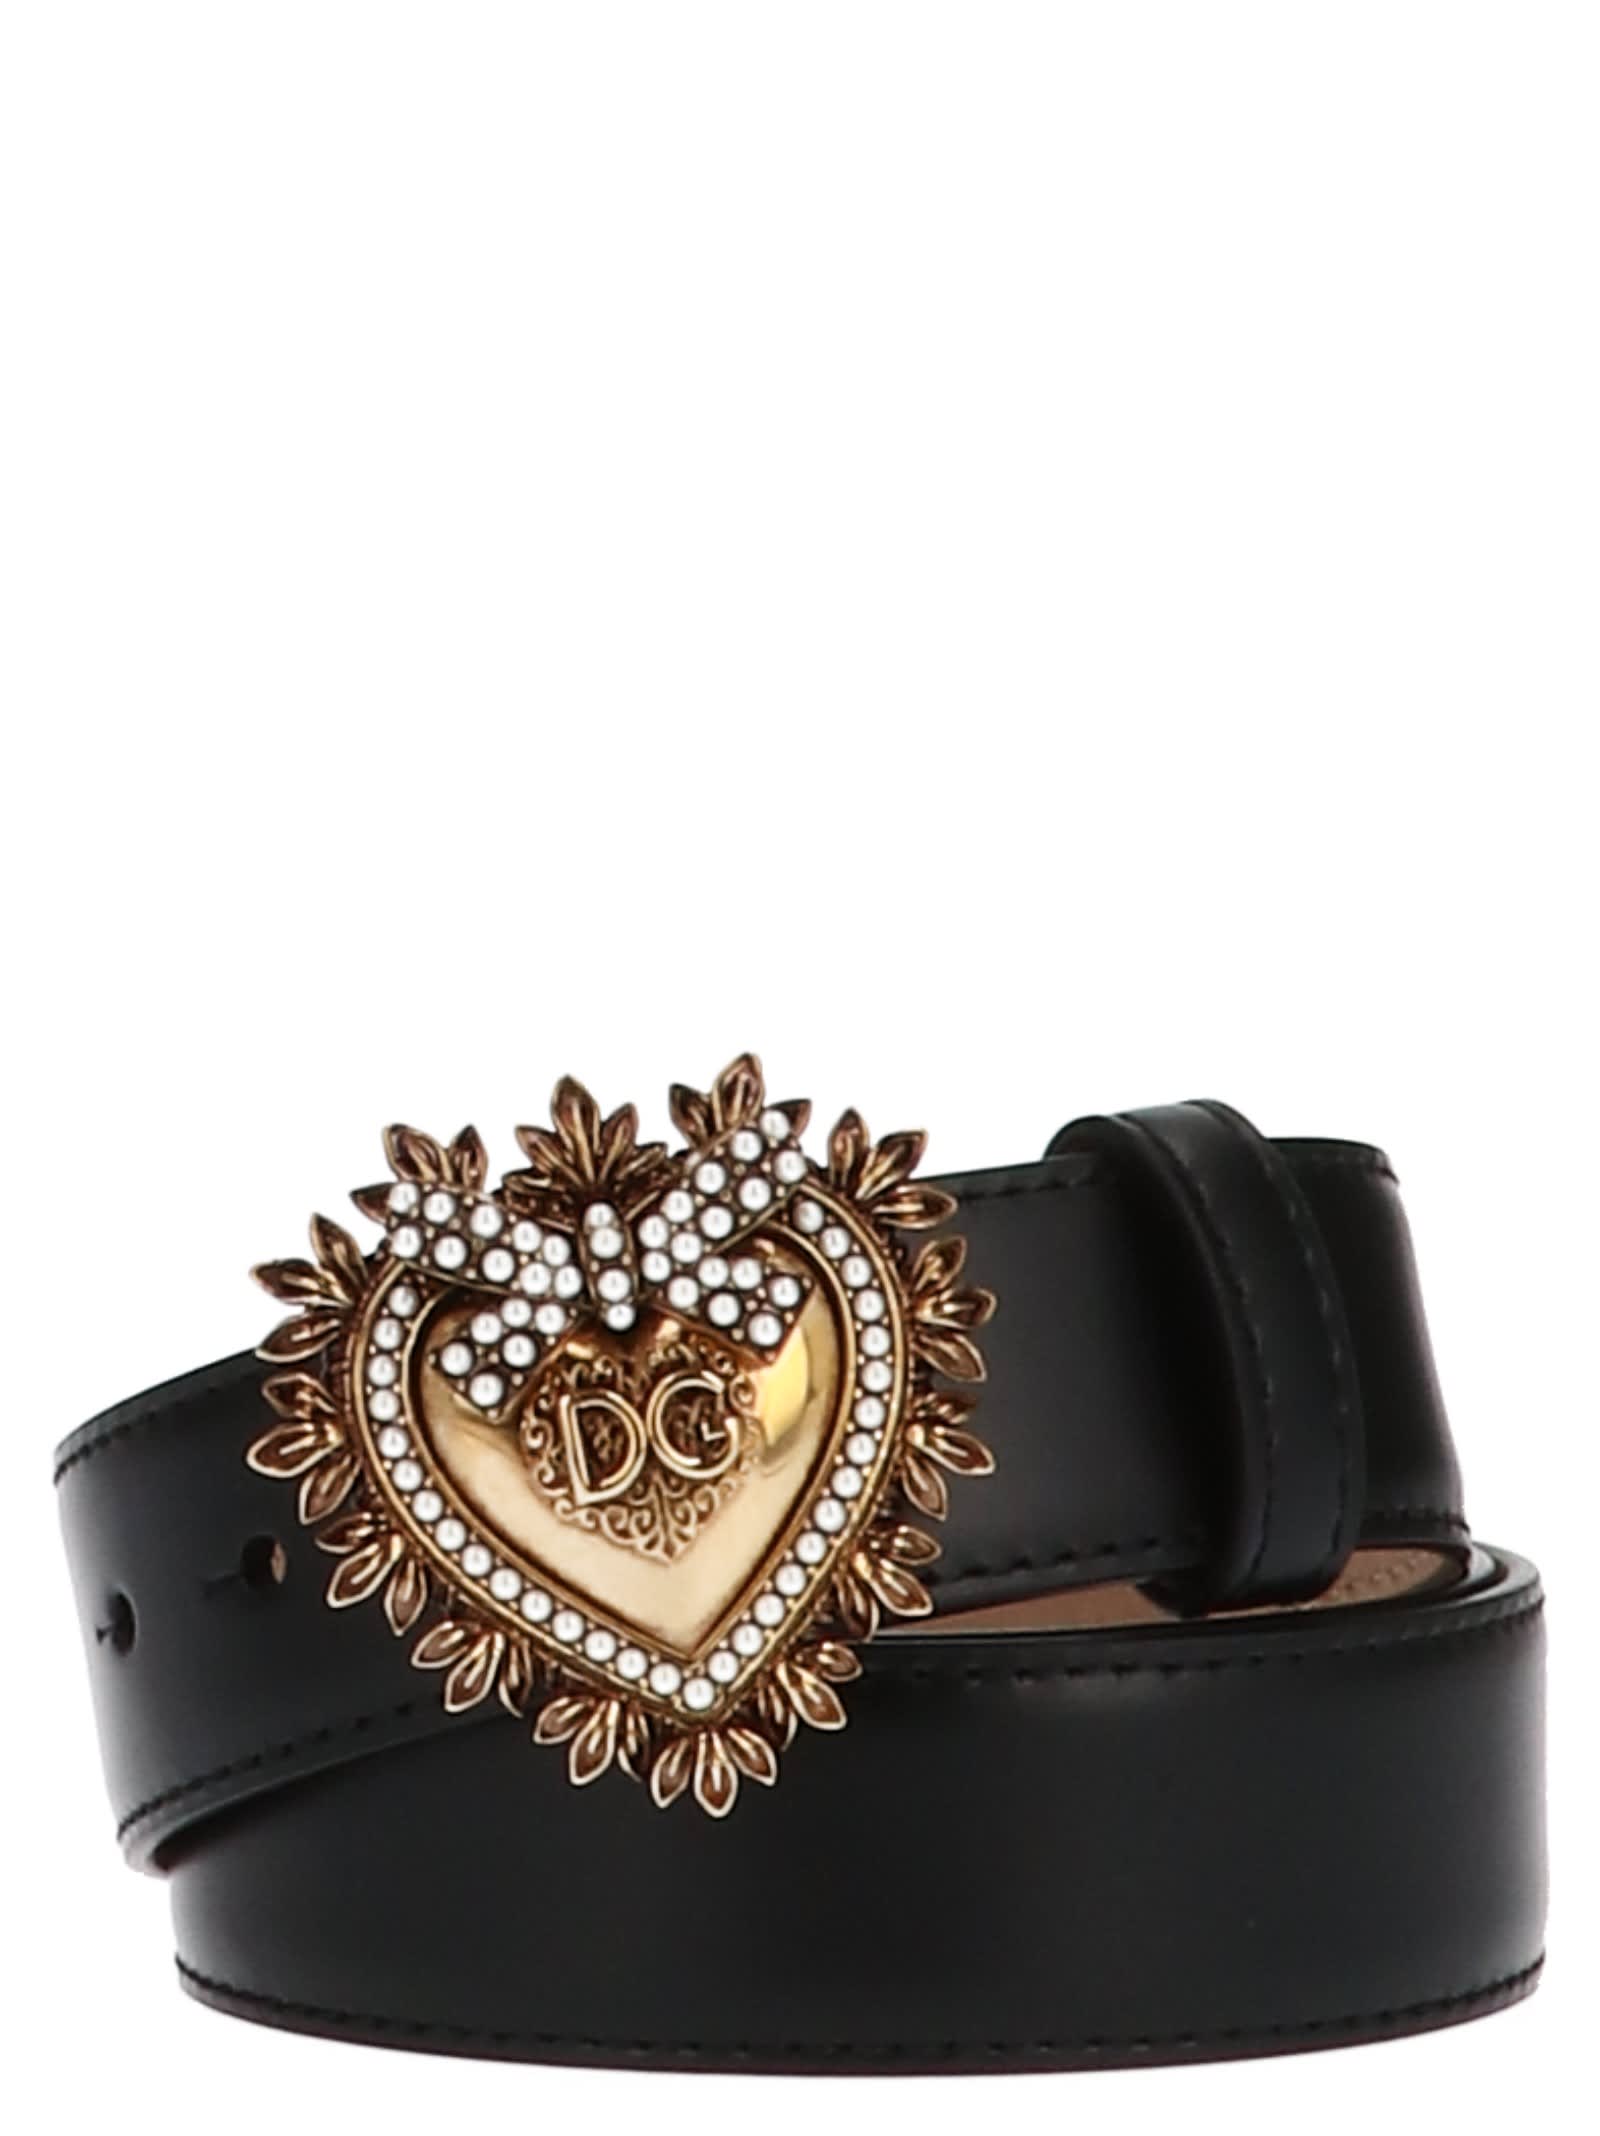 Dolce & Gabbana devotion Belt